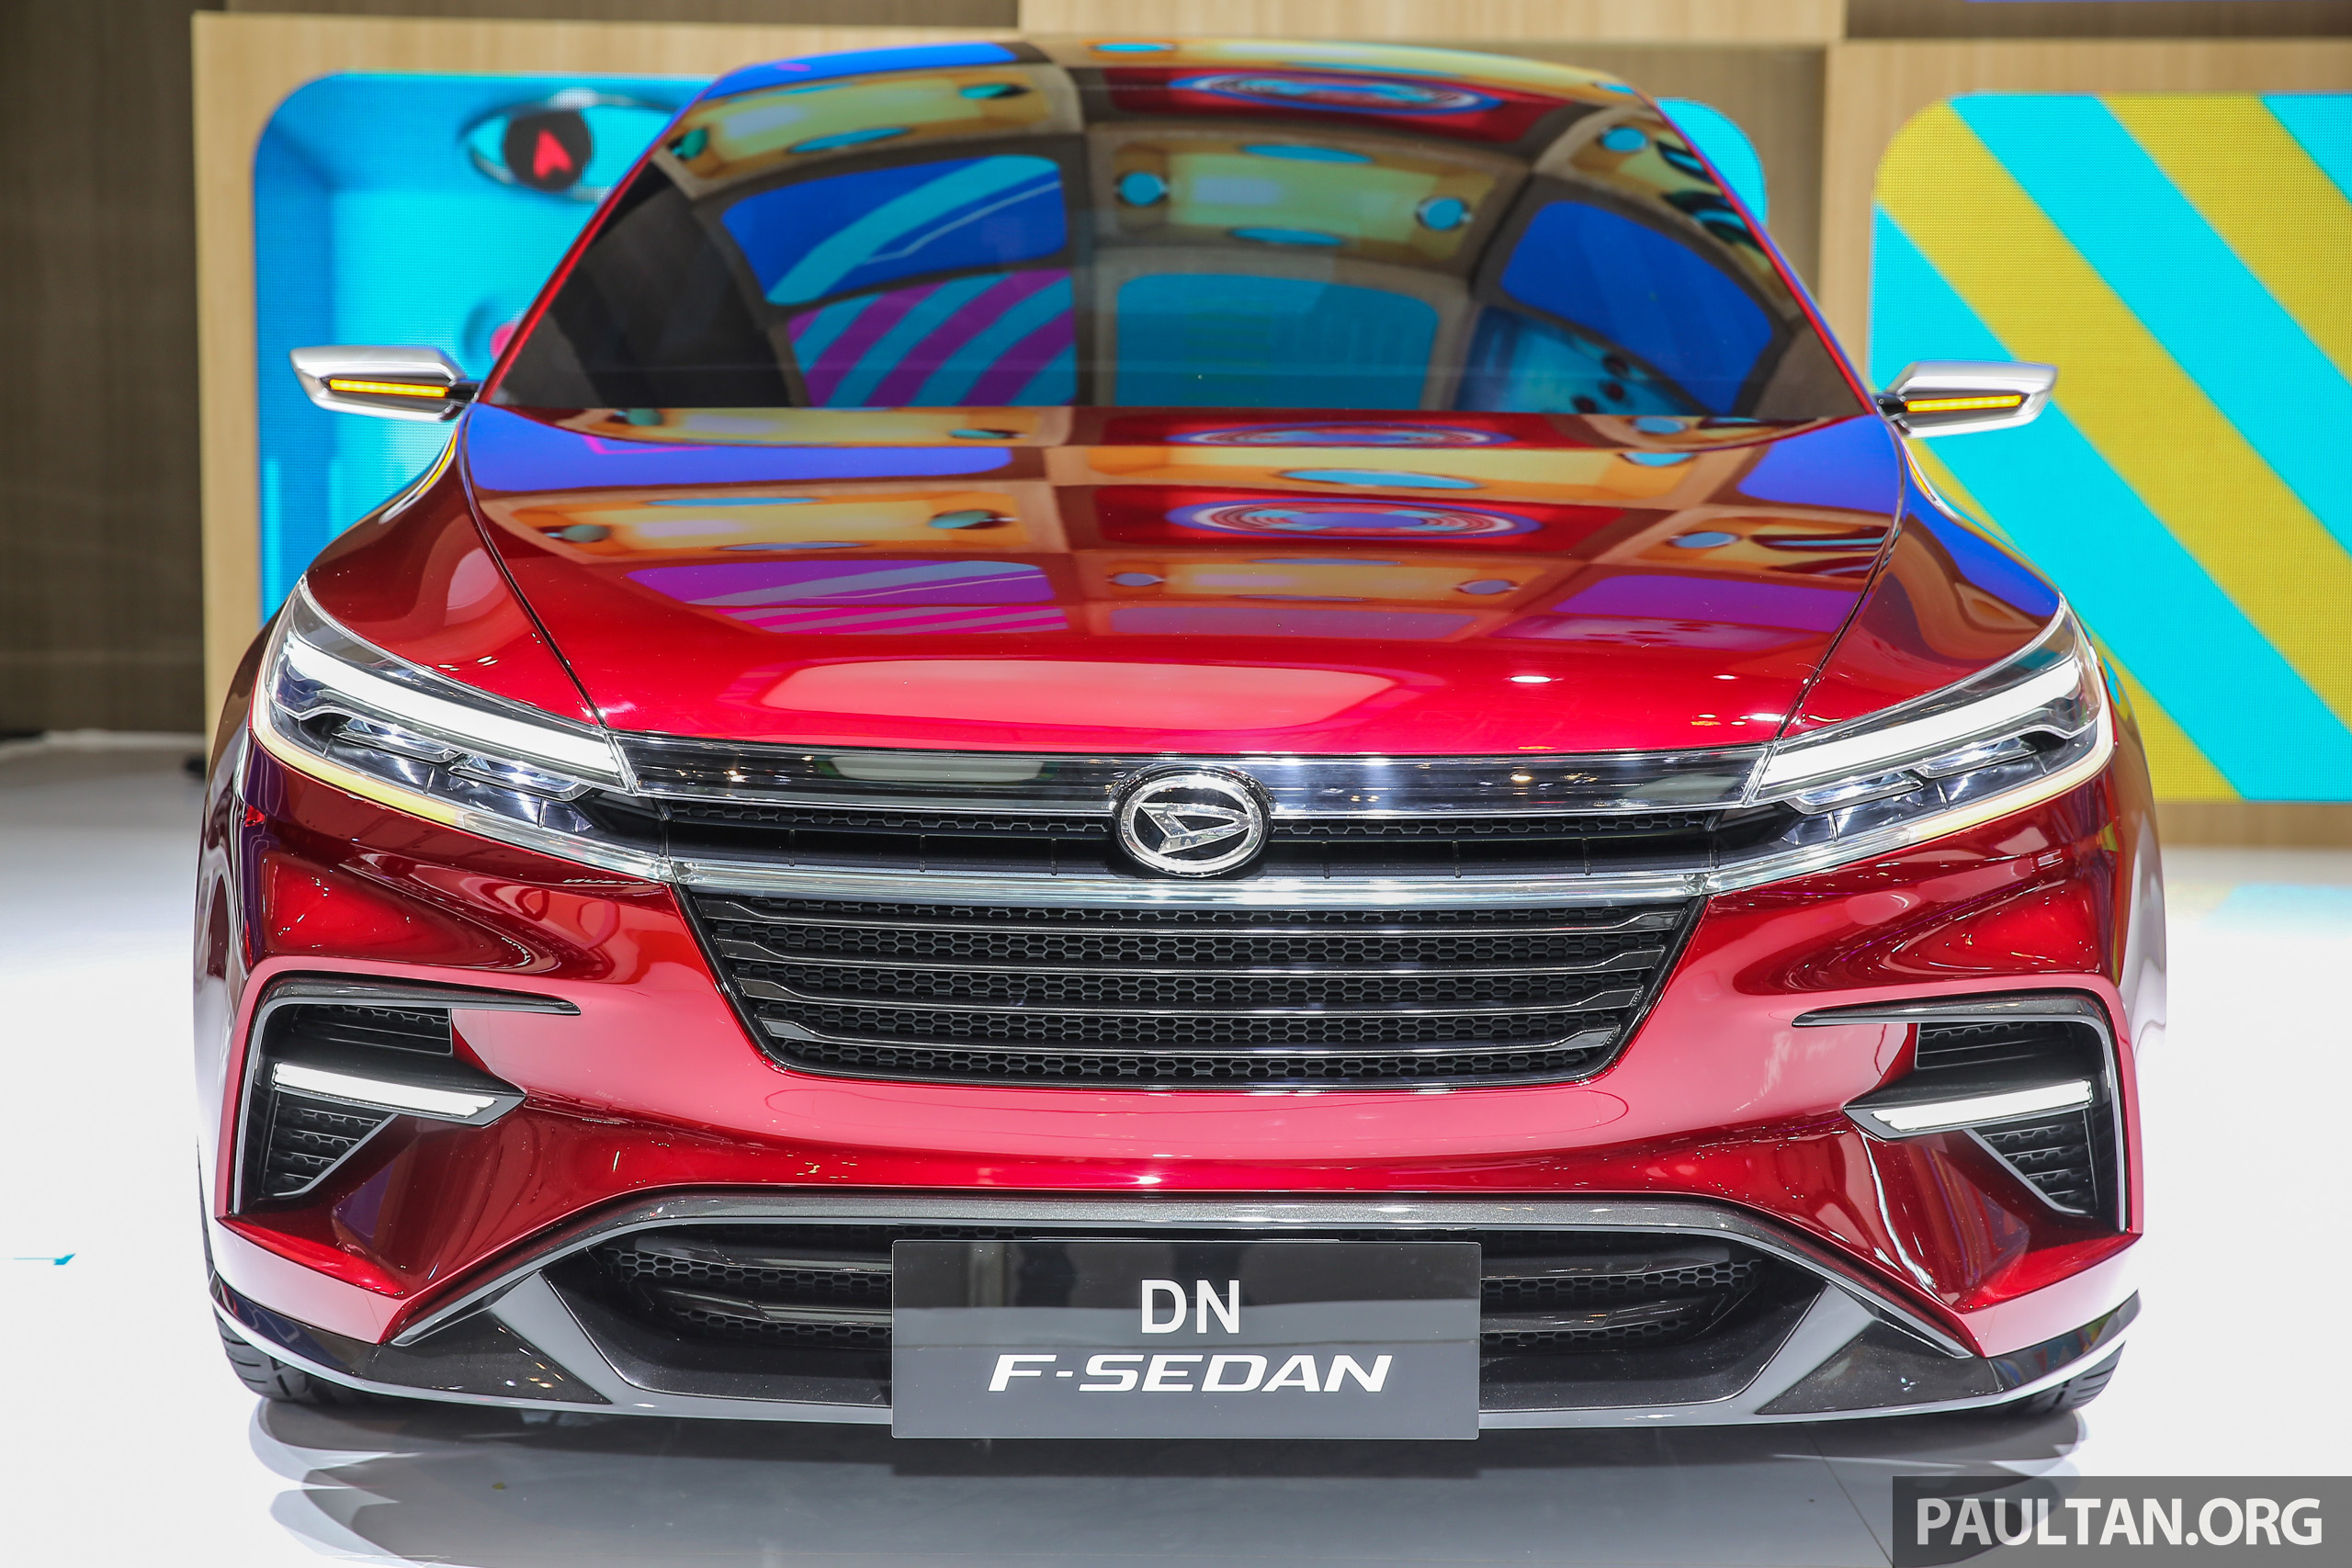 印尼车展daihatsu dn f sedan 概念车印尼全球首秀 daihatsu dn f sedan 3 paul tan 汽车资讯网